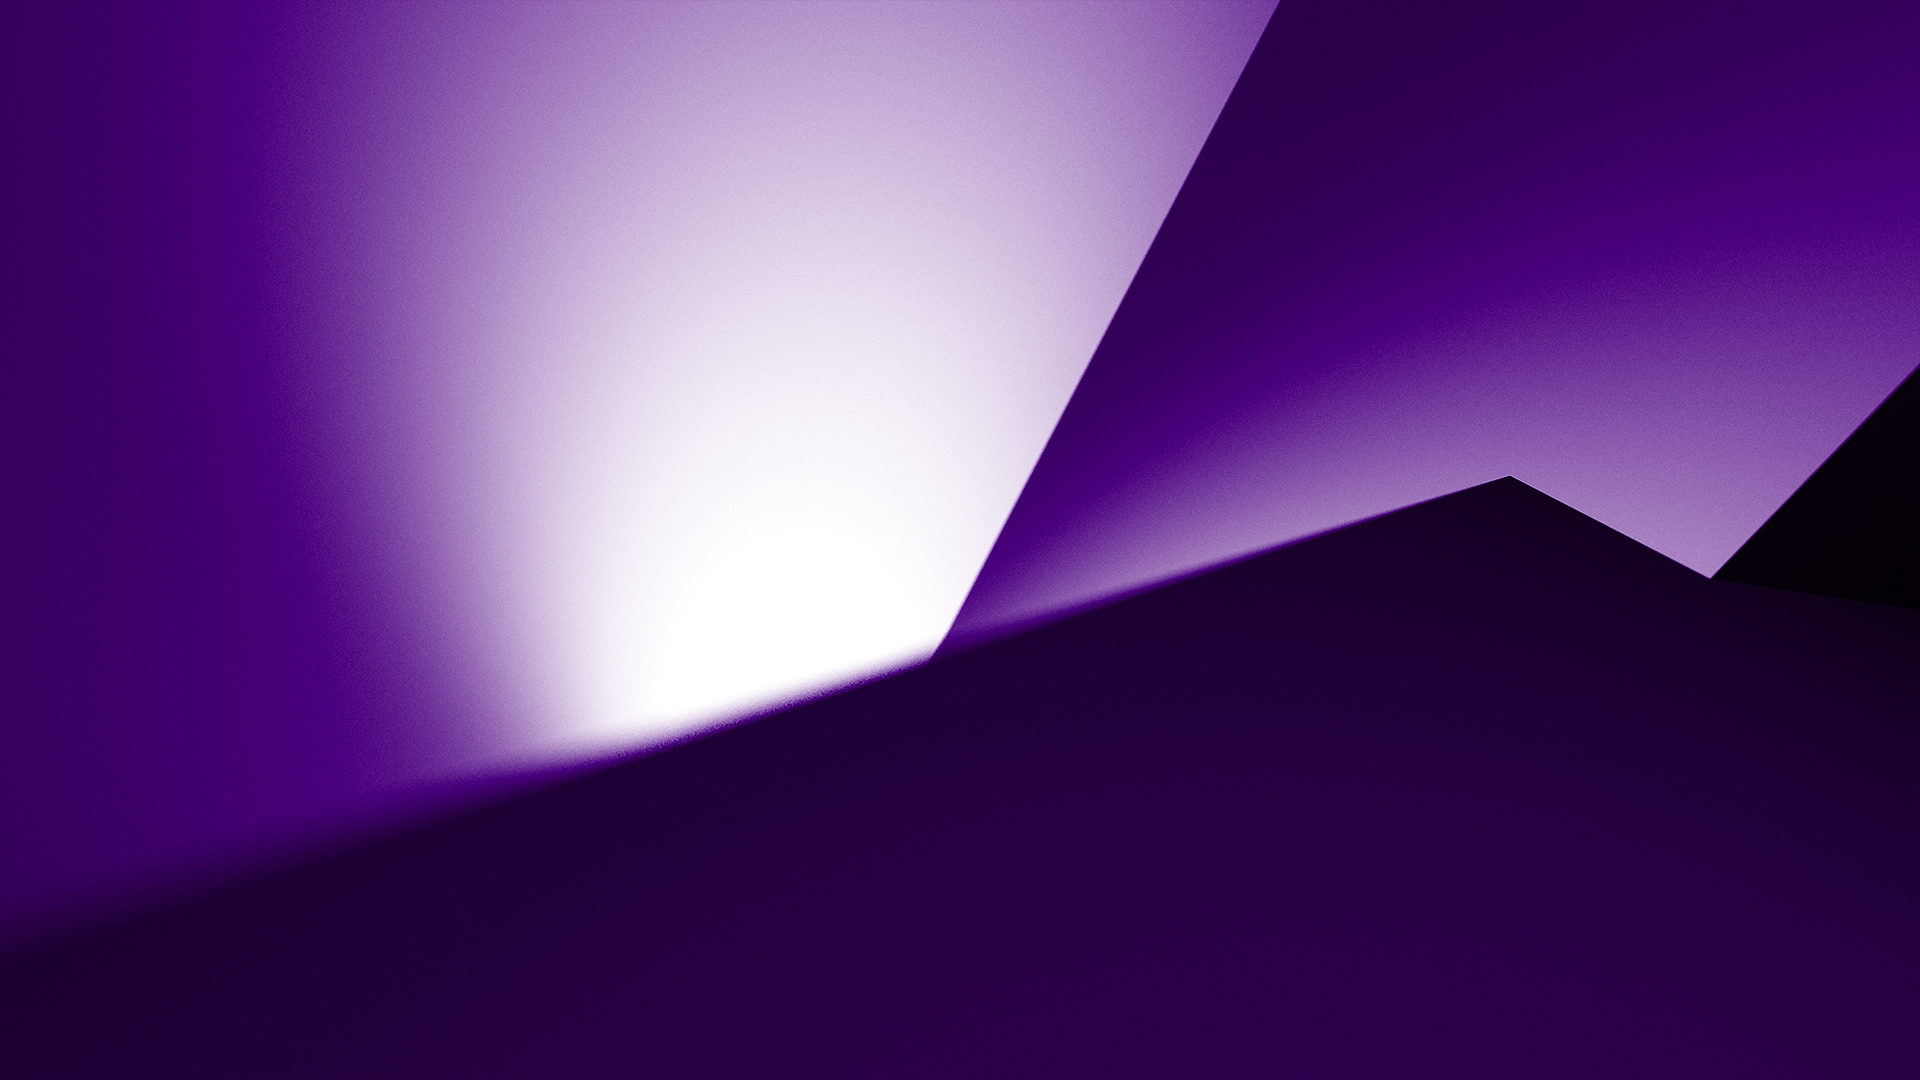 rra-background-purple-7.jpg